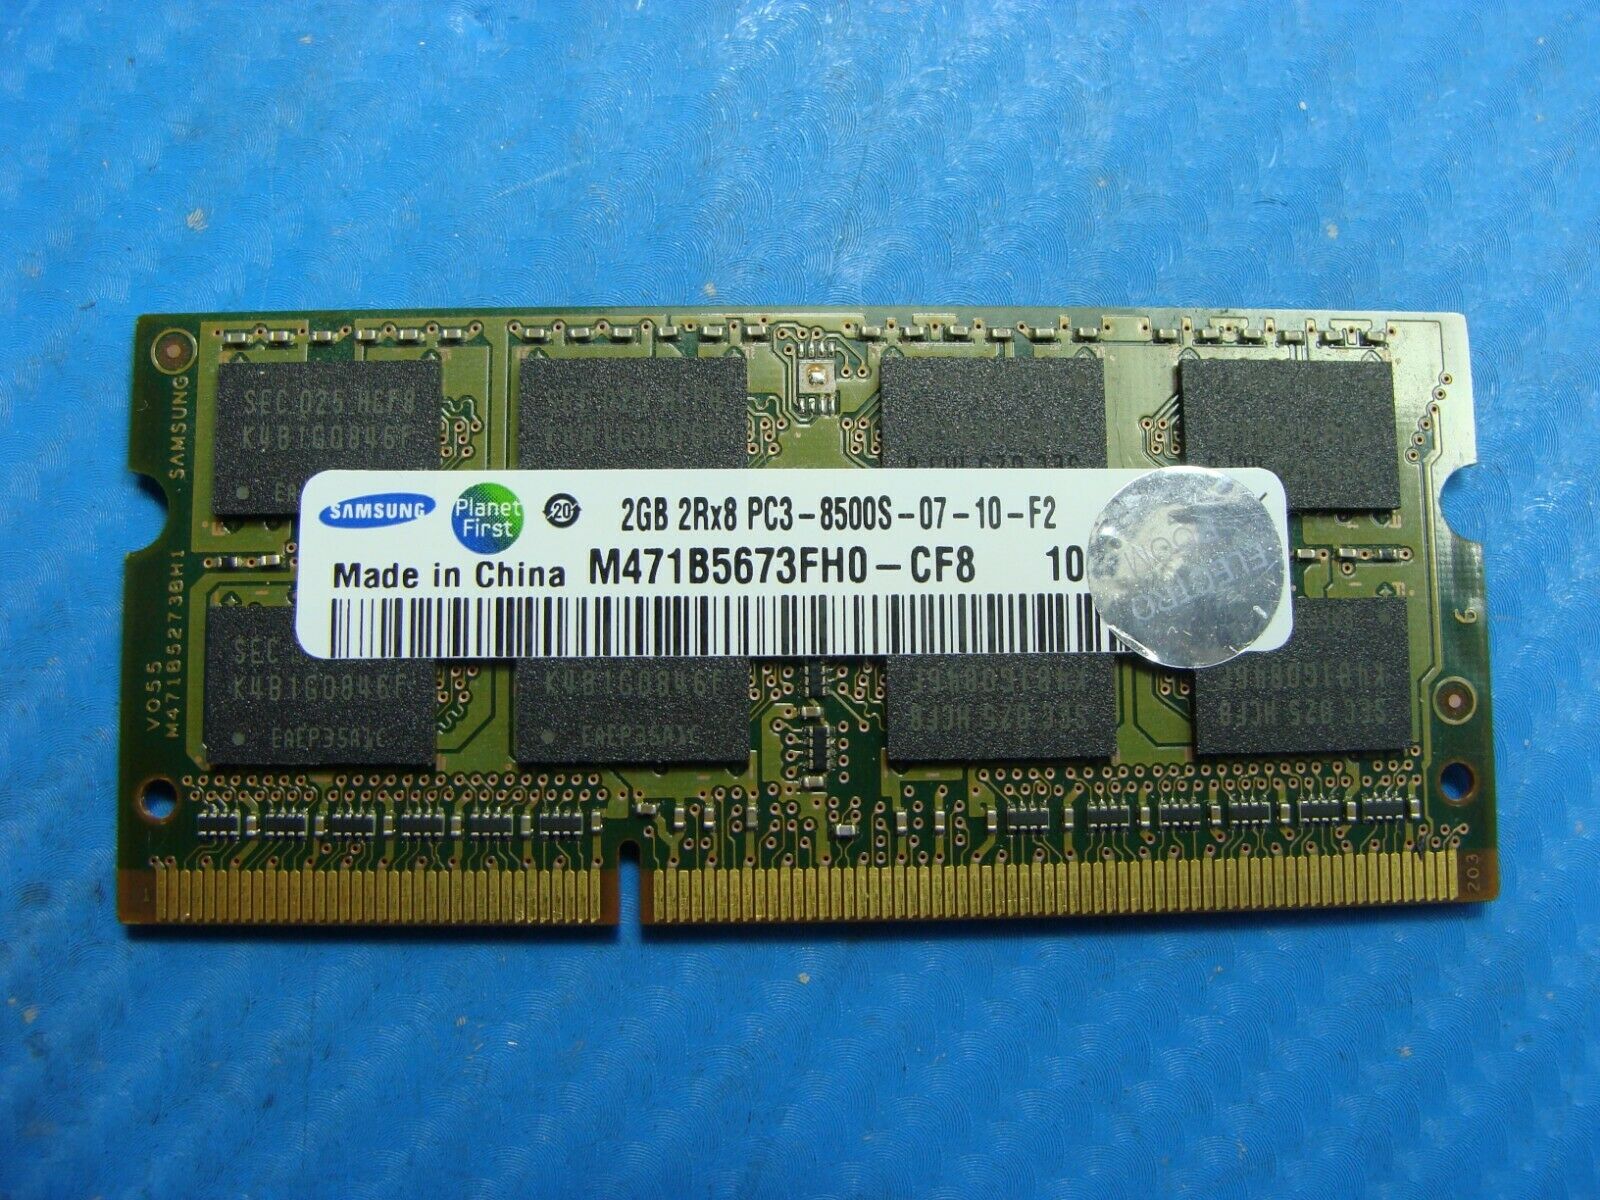 MacBook Pro A1278 Samsung 2GB Memory PC3-8500S-07-10-F2 M471B5673FH0-CF8 